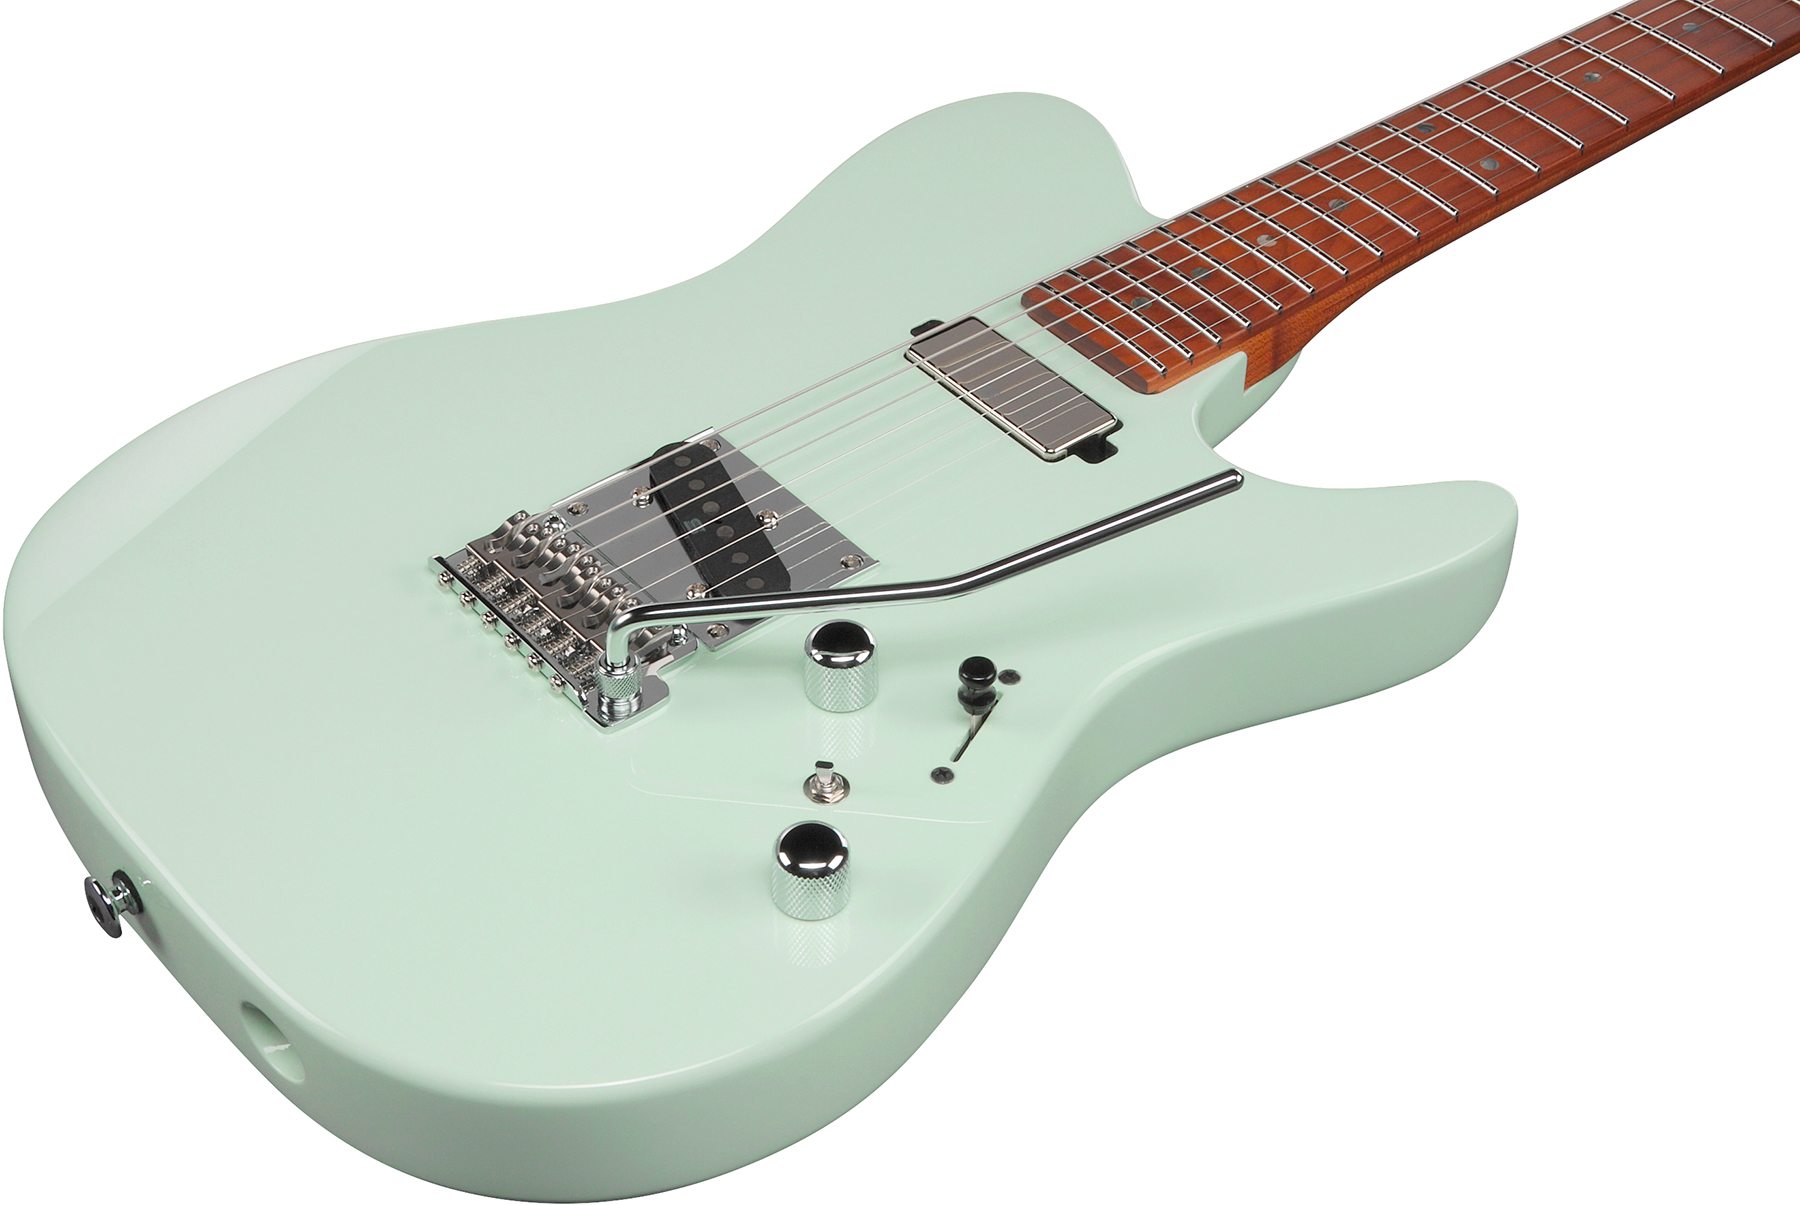 Ibanez Azs2200 Mgr Prestige Jap Smh Seymour Duncan Trem Mn - Mint Green - Televorm elektrische gitaar - Variation 2